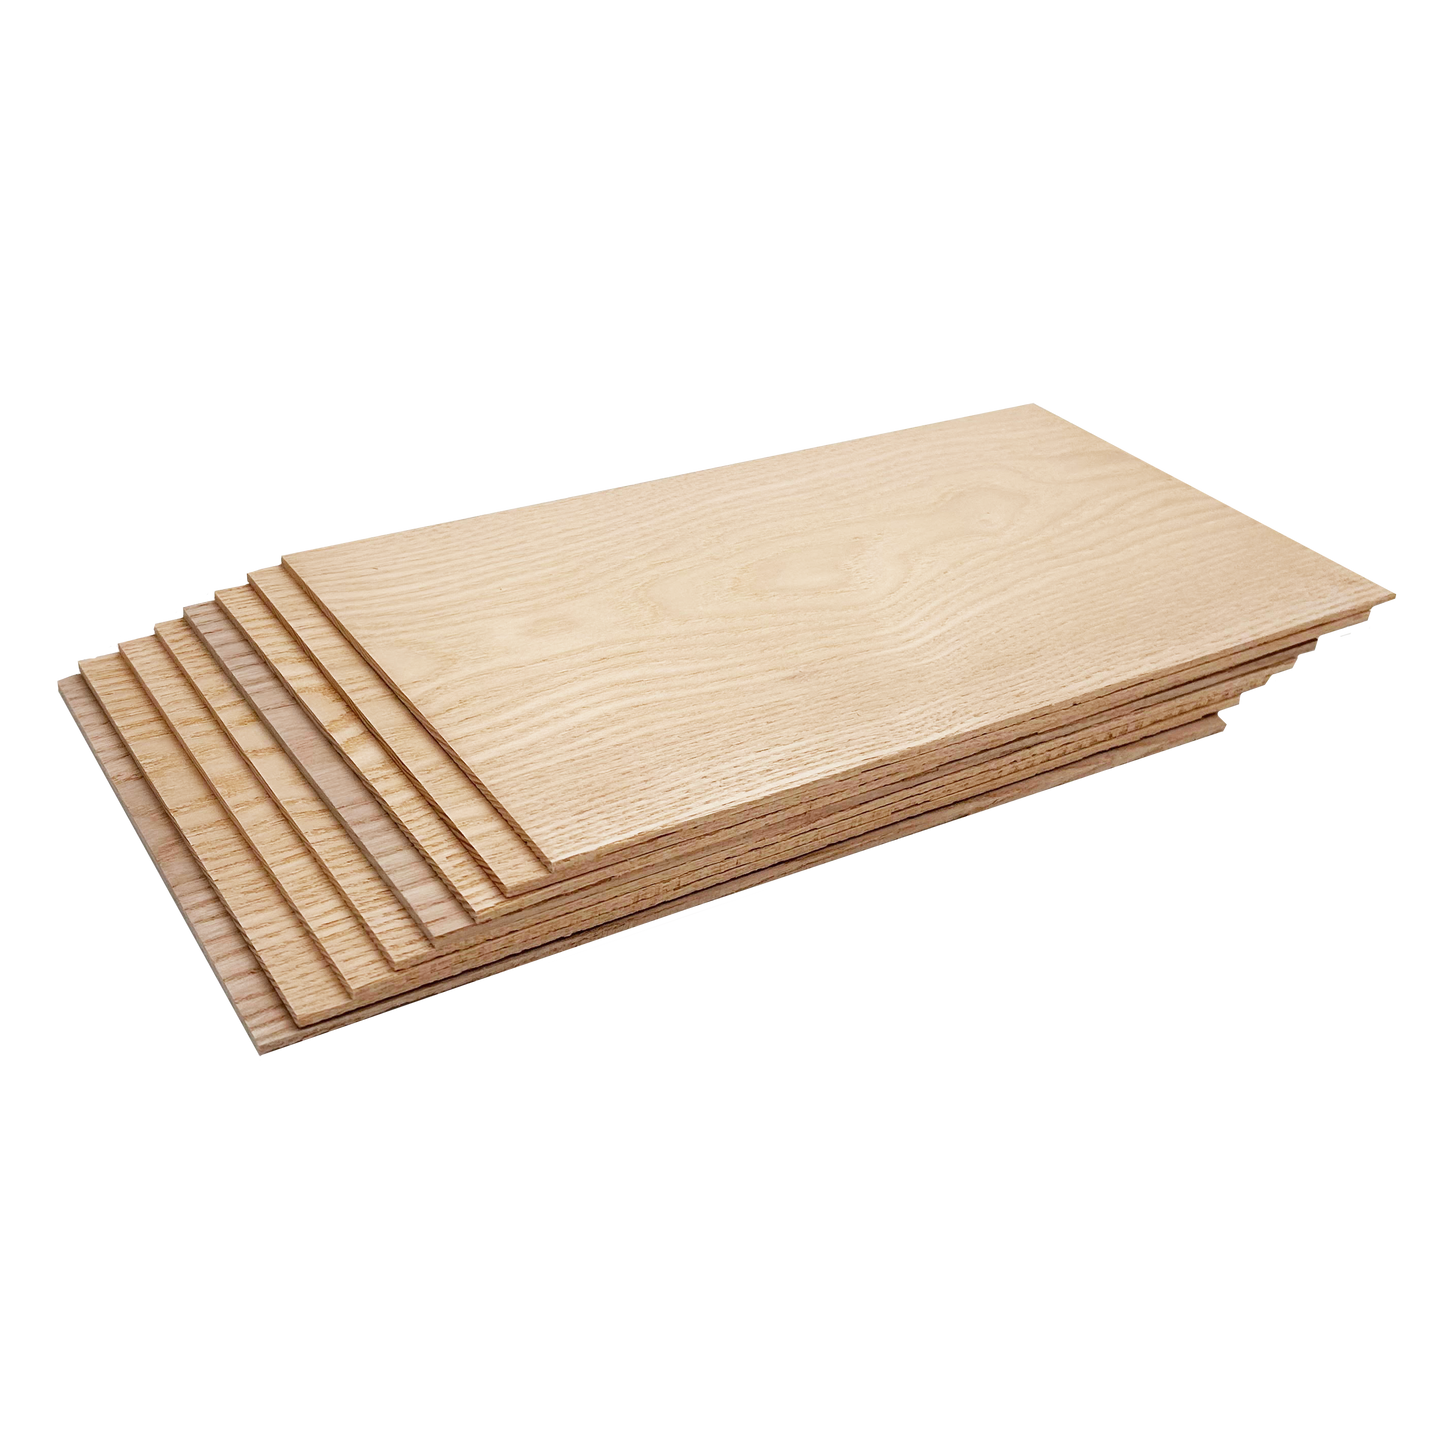 Ash Thin Sawn Lumber 1/8" x 6 1/2"